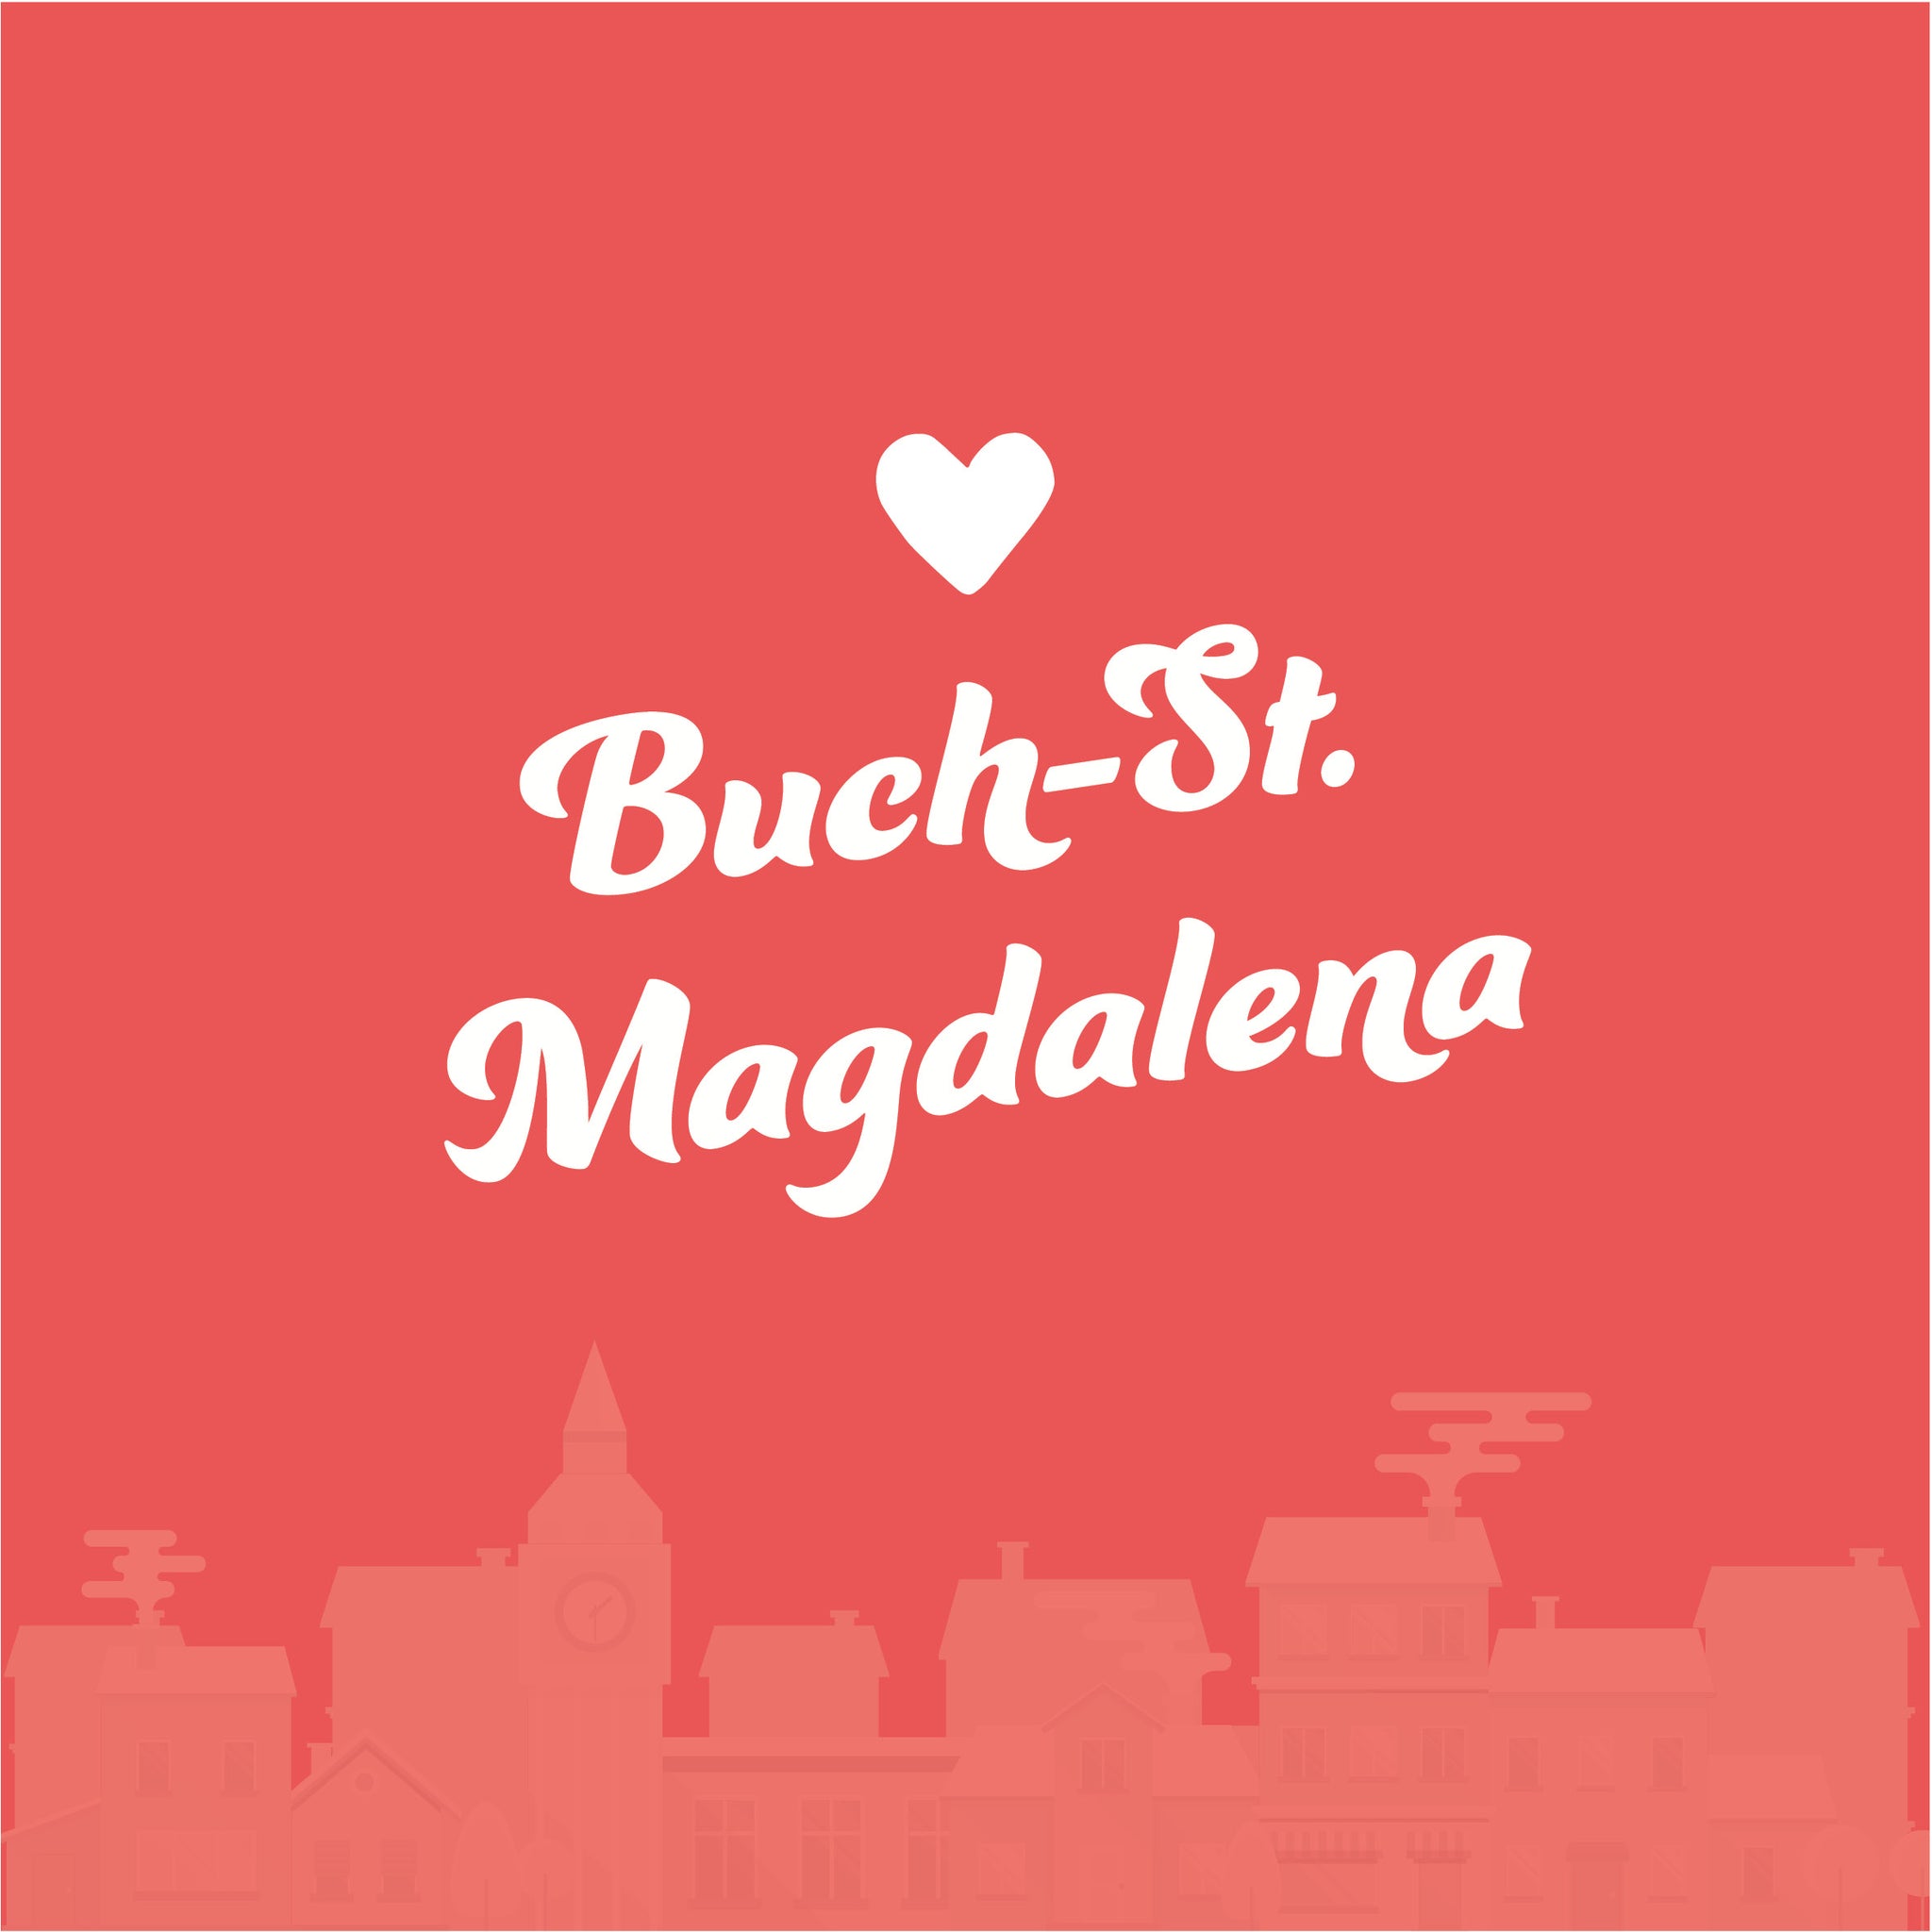 Buch-St. Magdalena